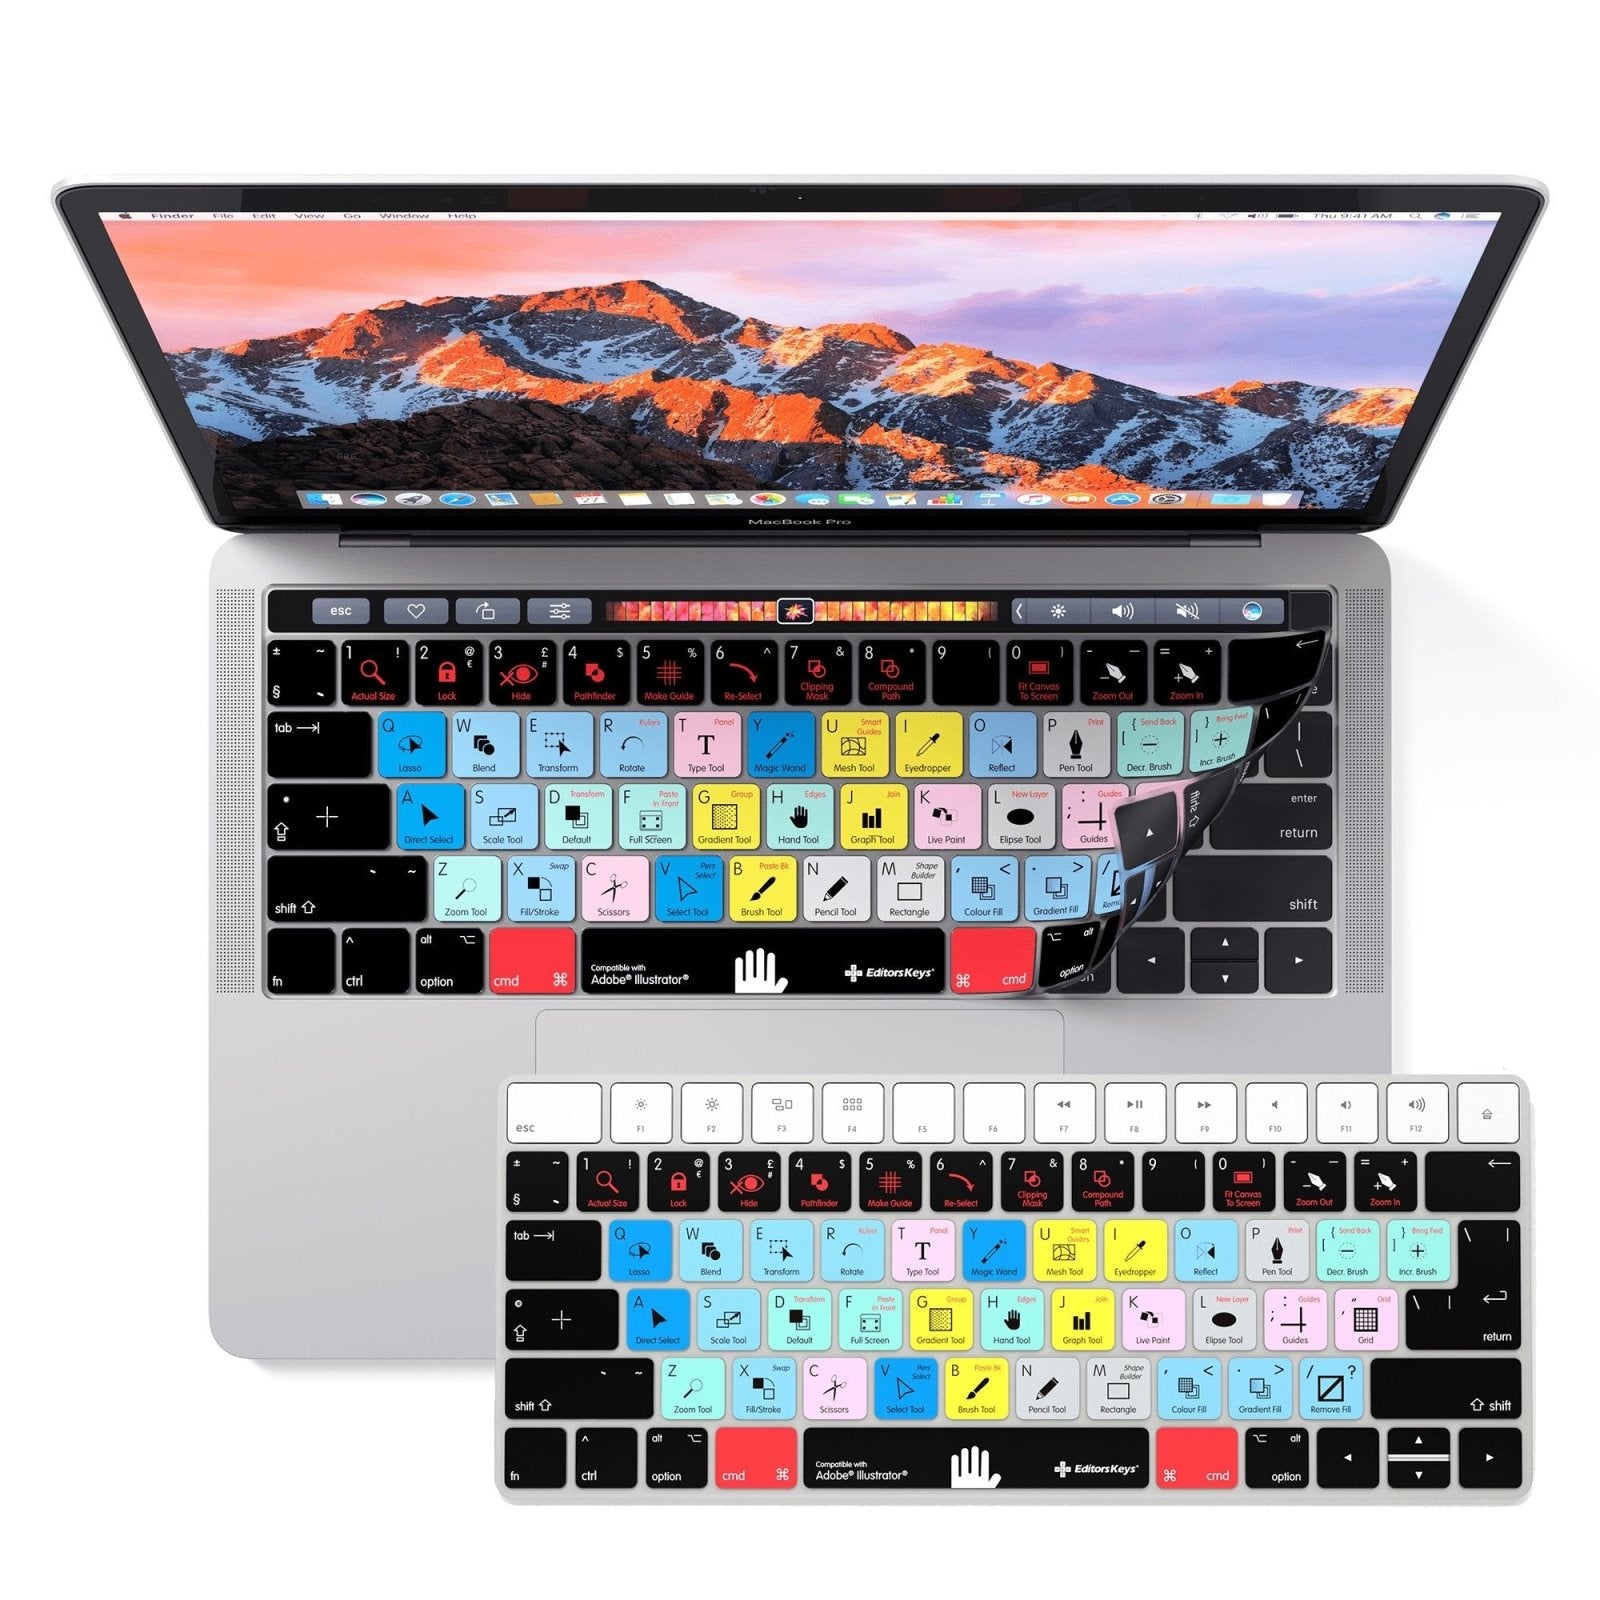 Adobe Illustrator Keyboard Covers for MacBook and iMac - Editors Keys